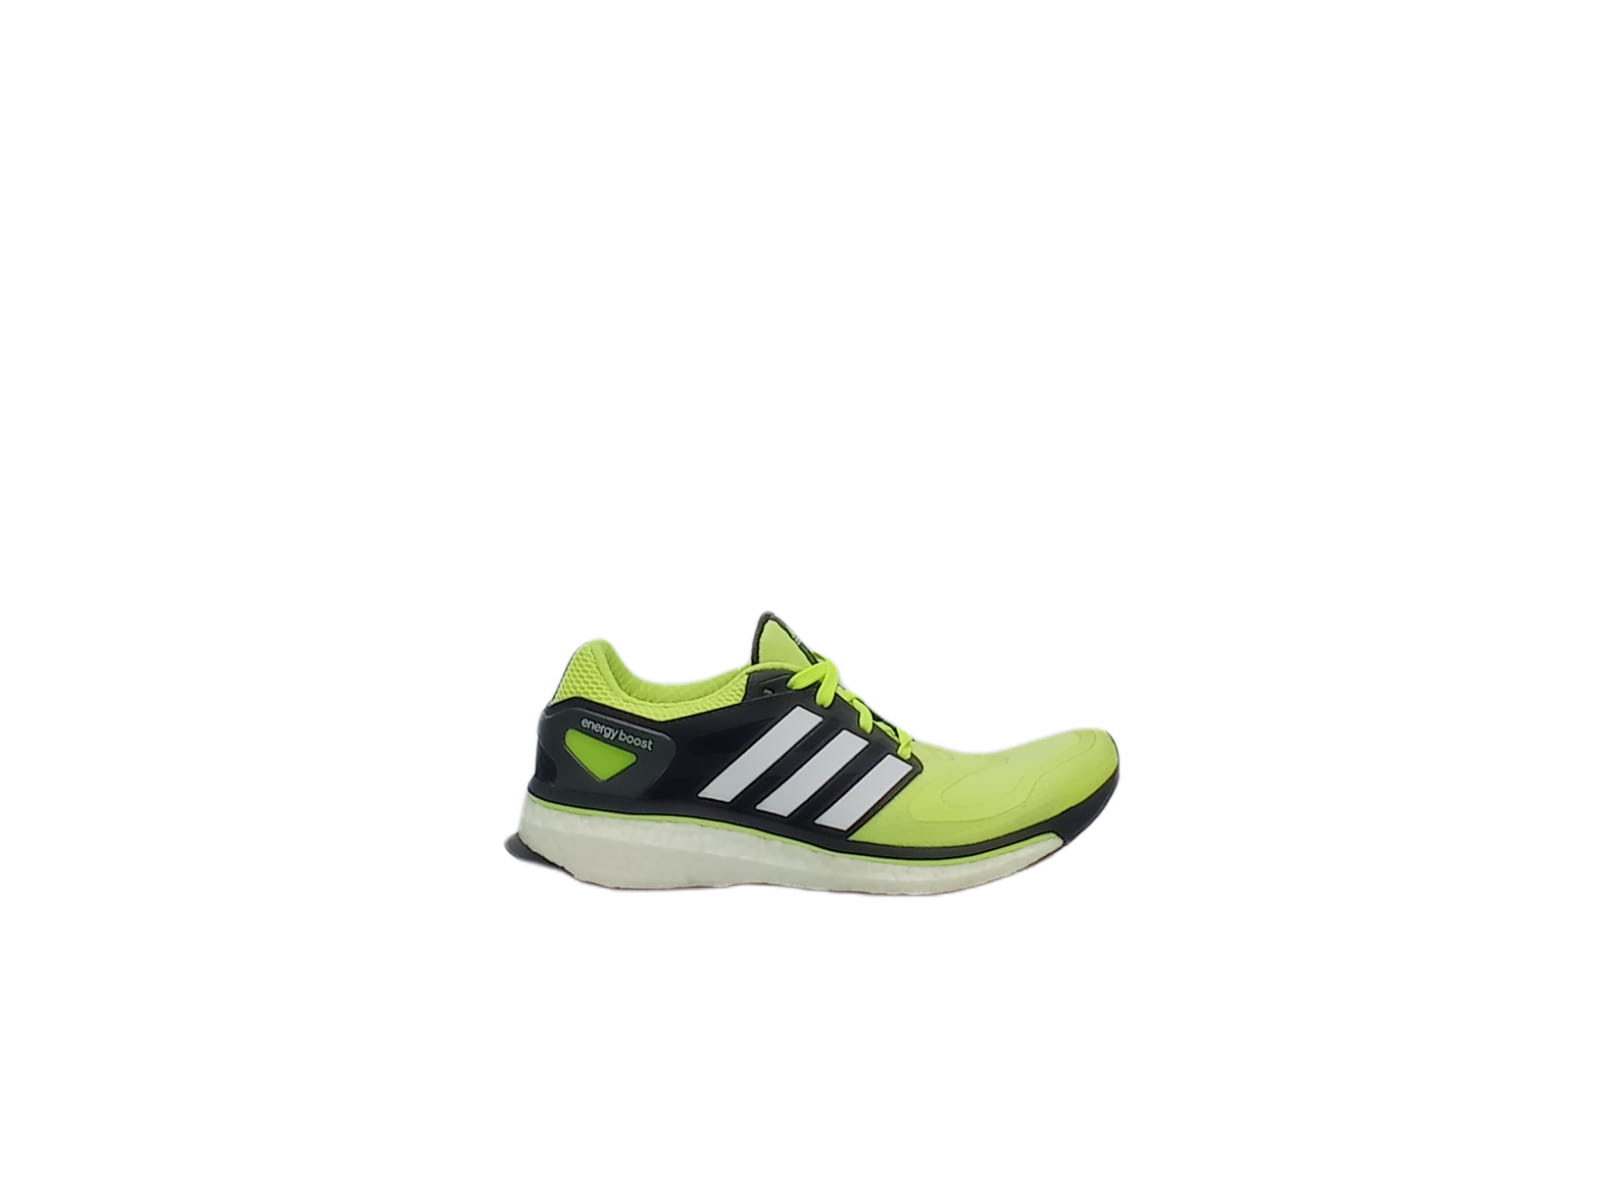 Scarpa Adidas Energy Boost M Giallo Uomo Running Q34010 | eBay